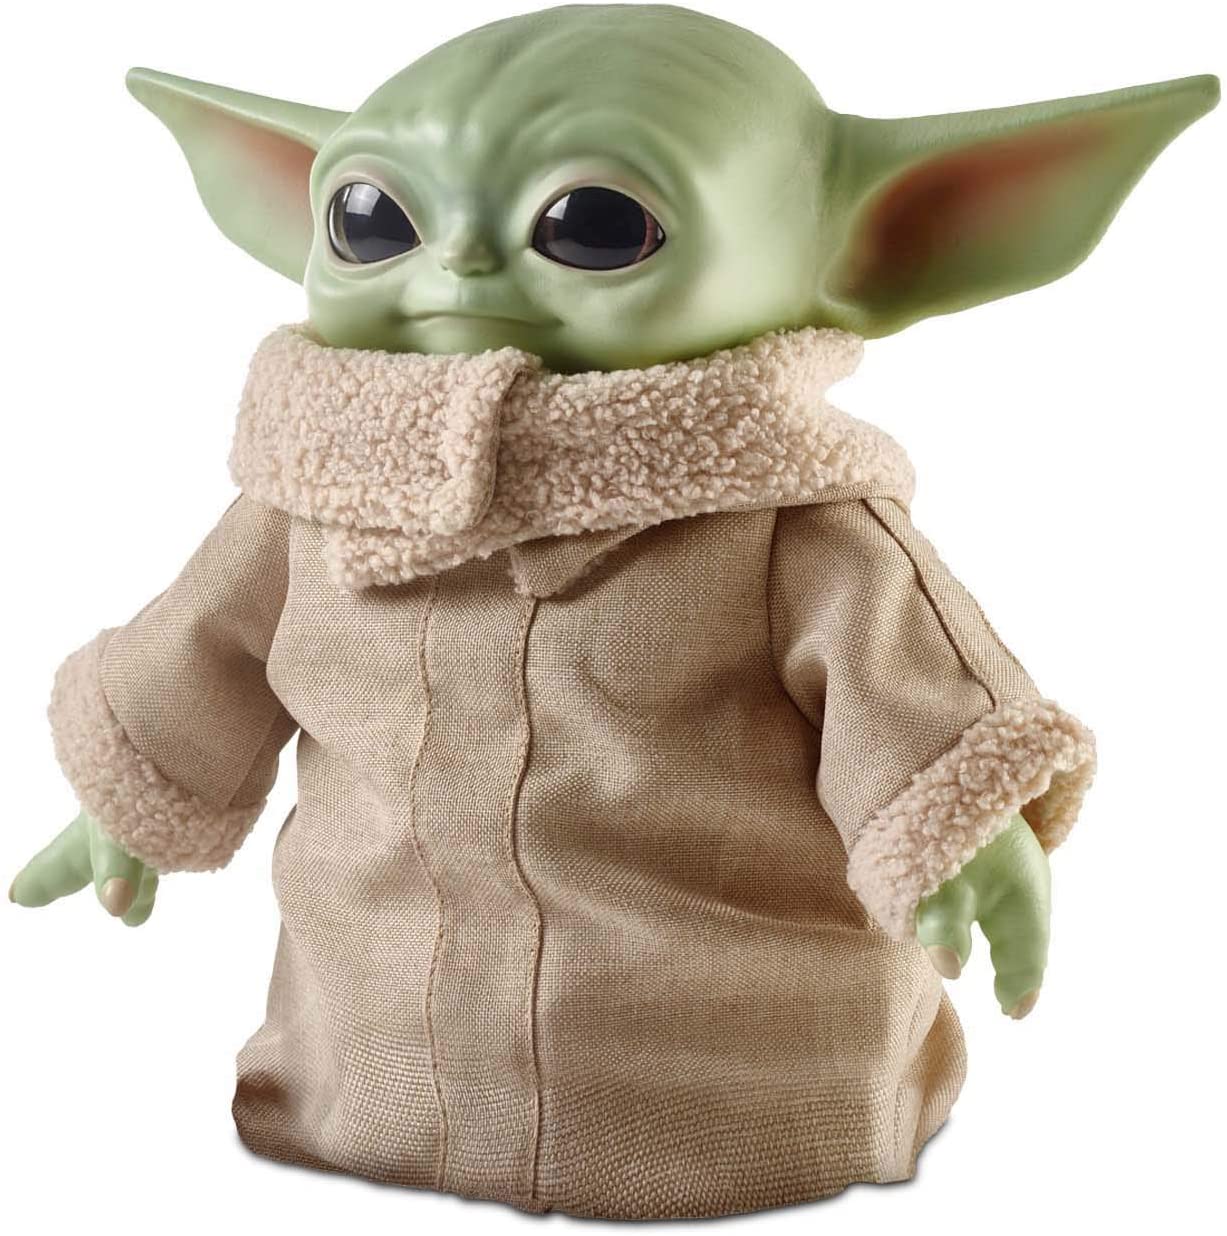 Mattel Star Wars The Mandalorian 7'' The Child (Baby Yoda) Plush